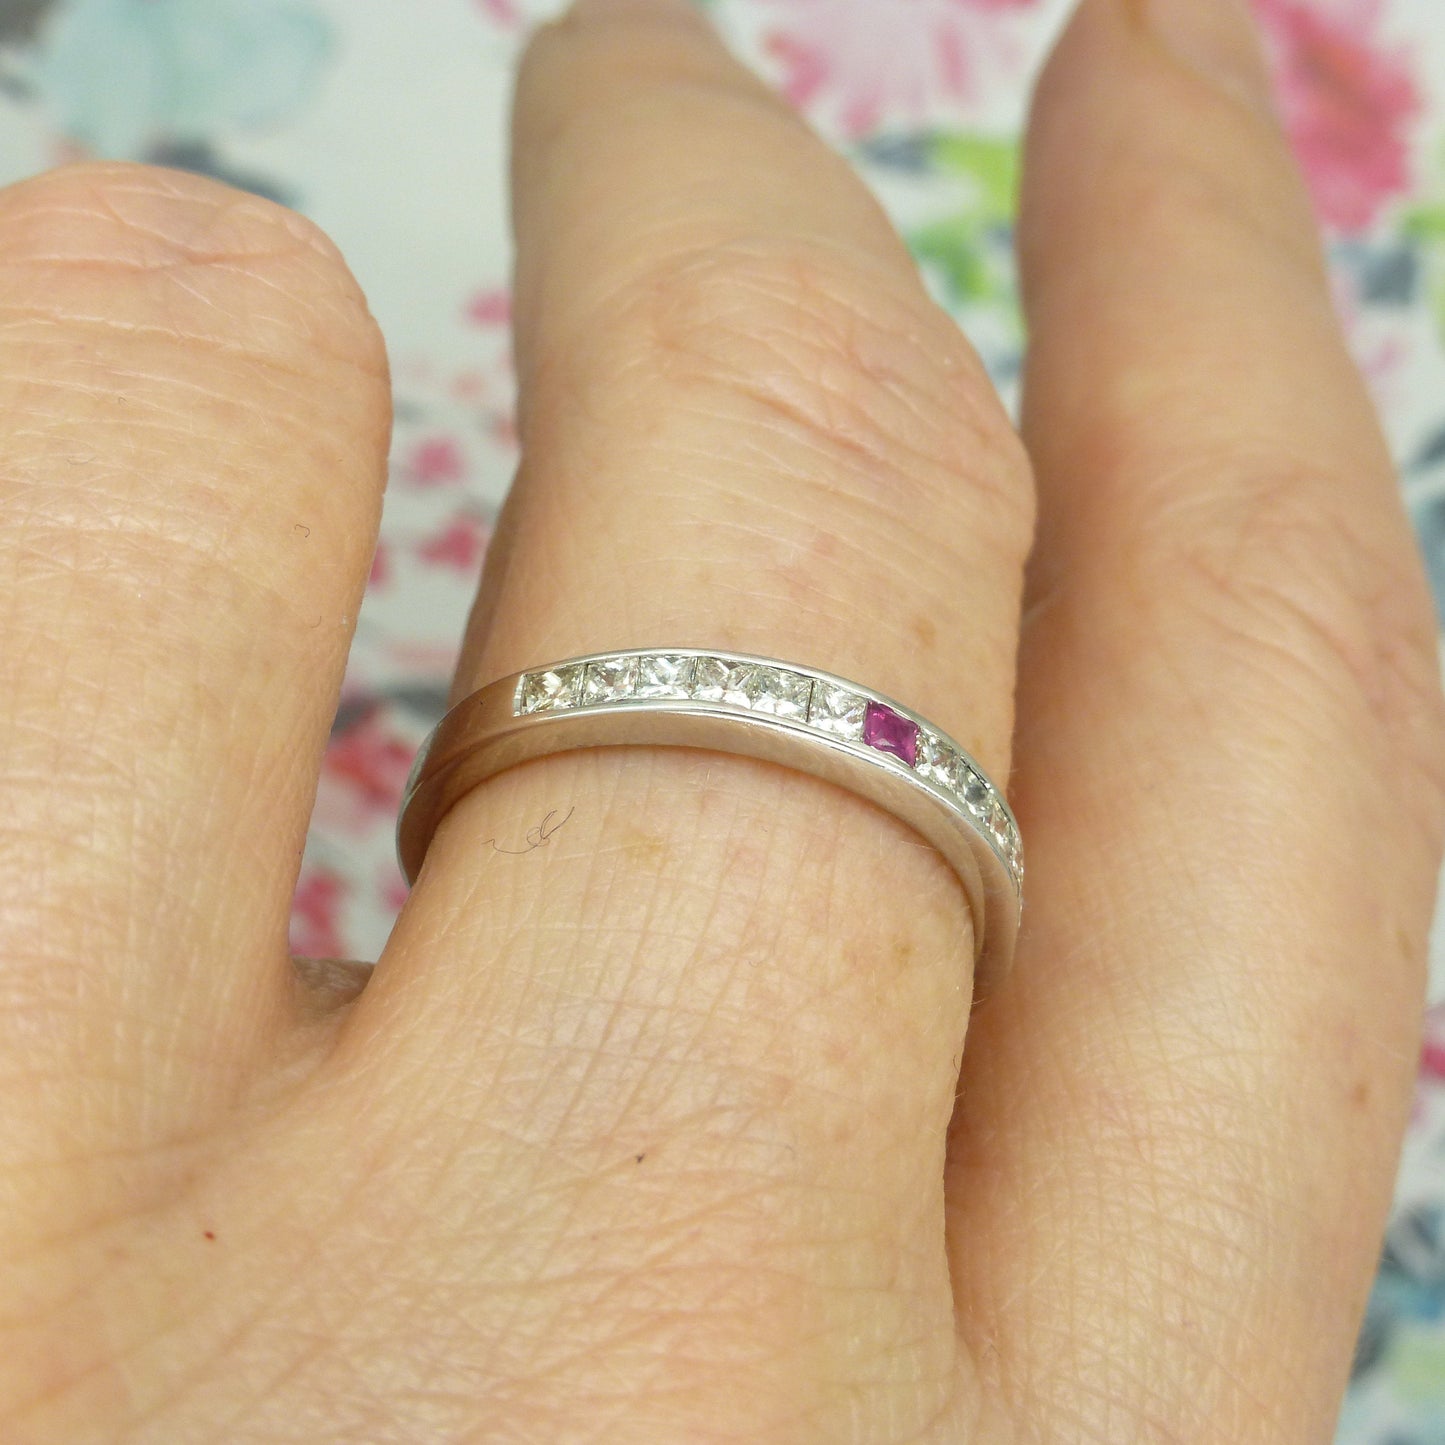 Vintage 18ct white gold Ruby & Square cut Diamond eternity wedding ring